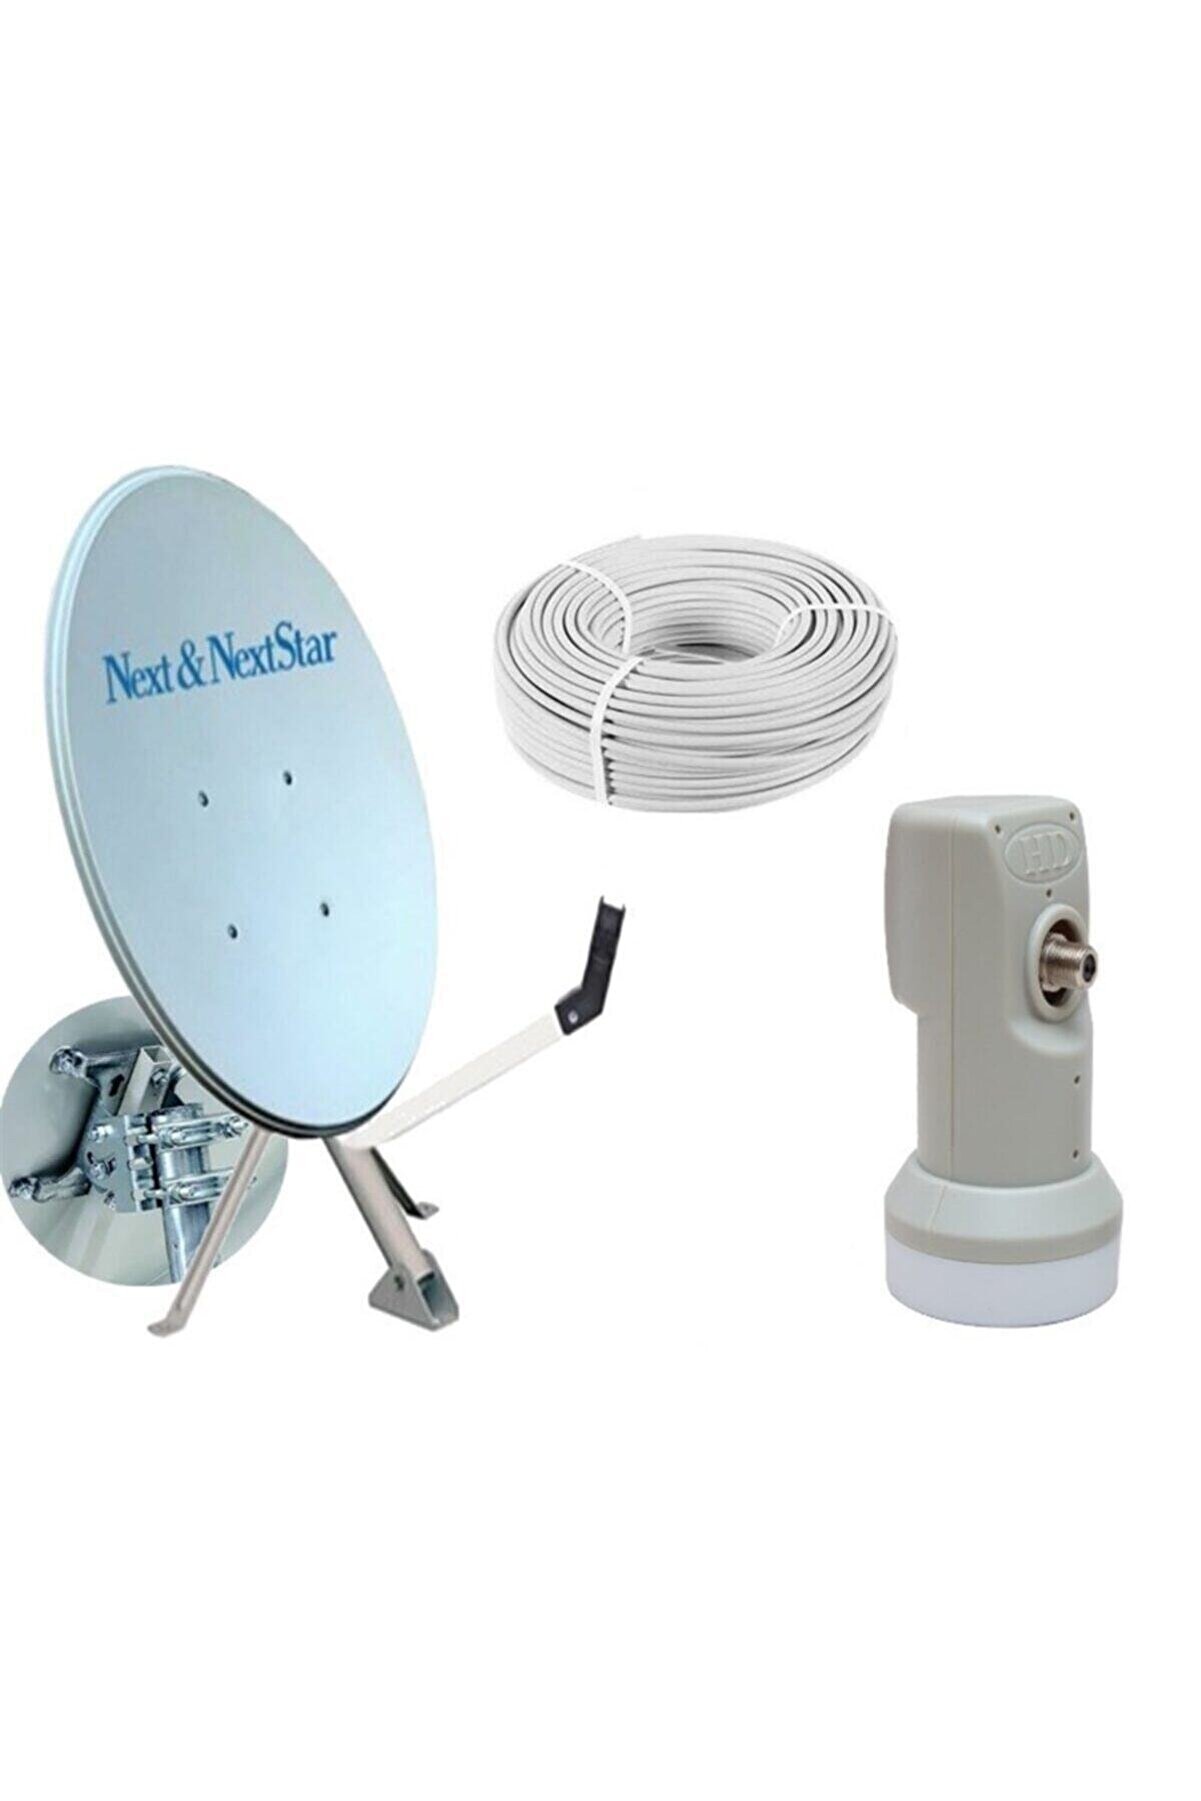 Genel Markalar 80 Cm Next Nextstar Ofset Çanak Anten Full Set Tekli Lnb 25 Mt Anten Kablosu 150020